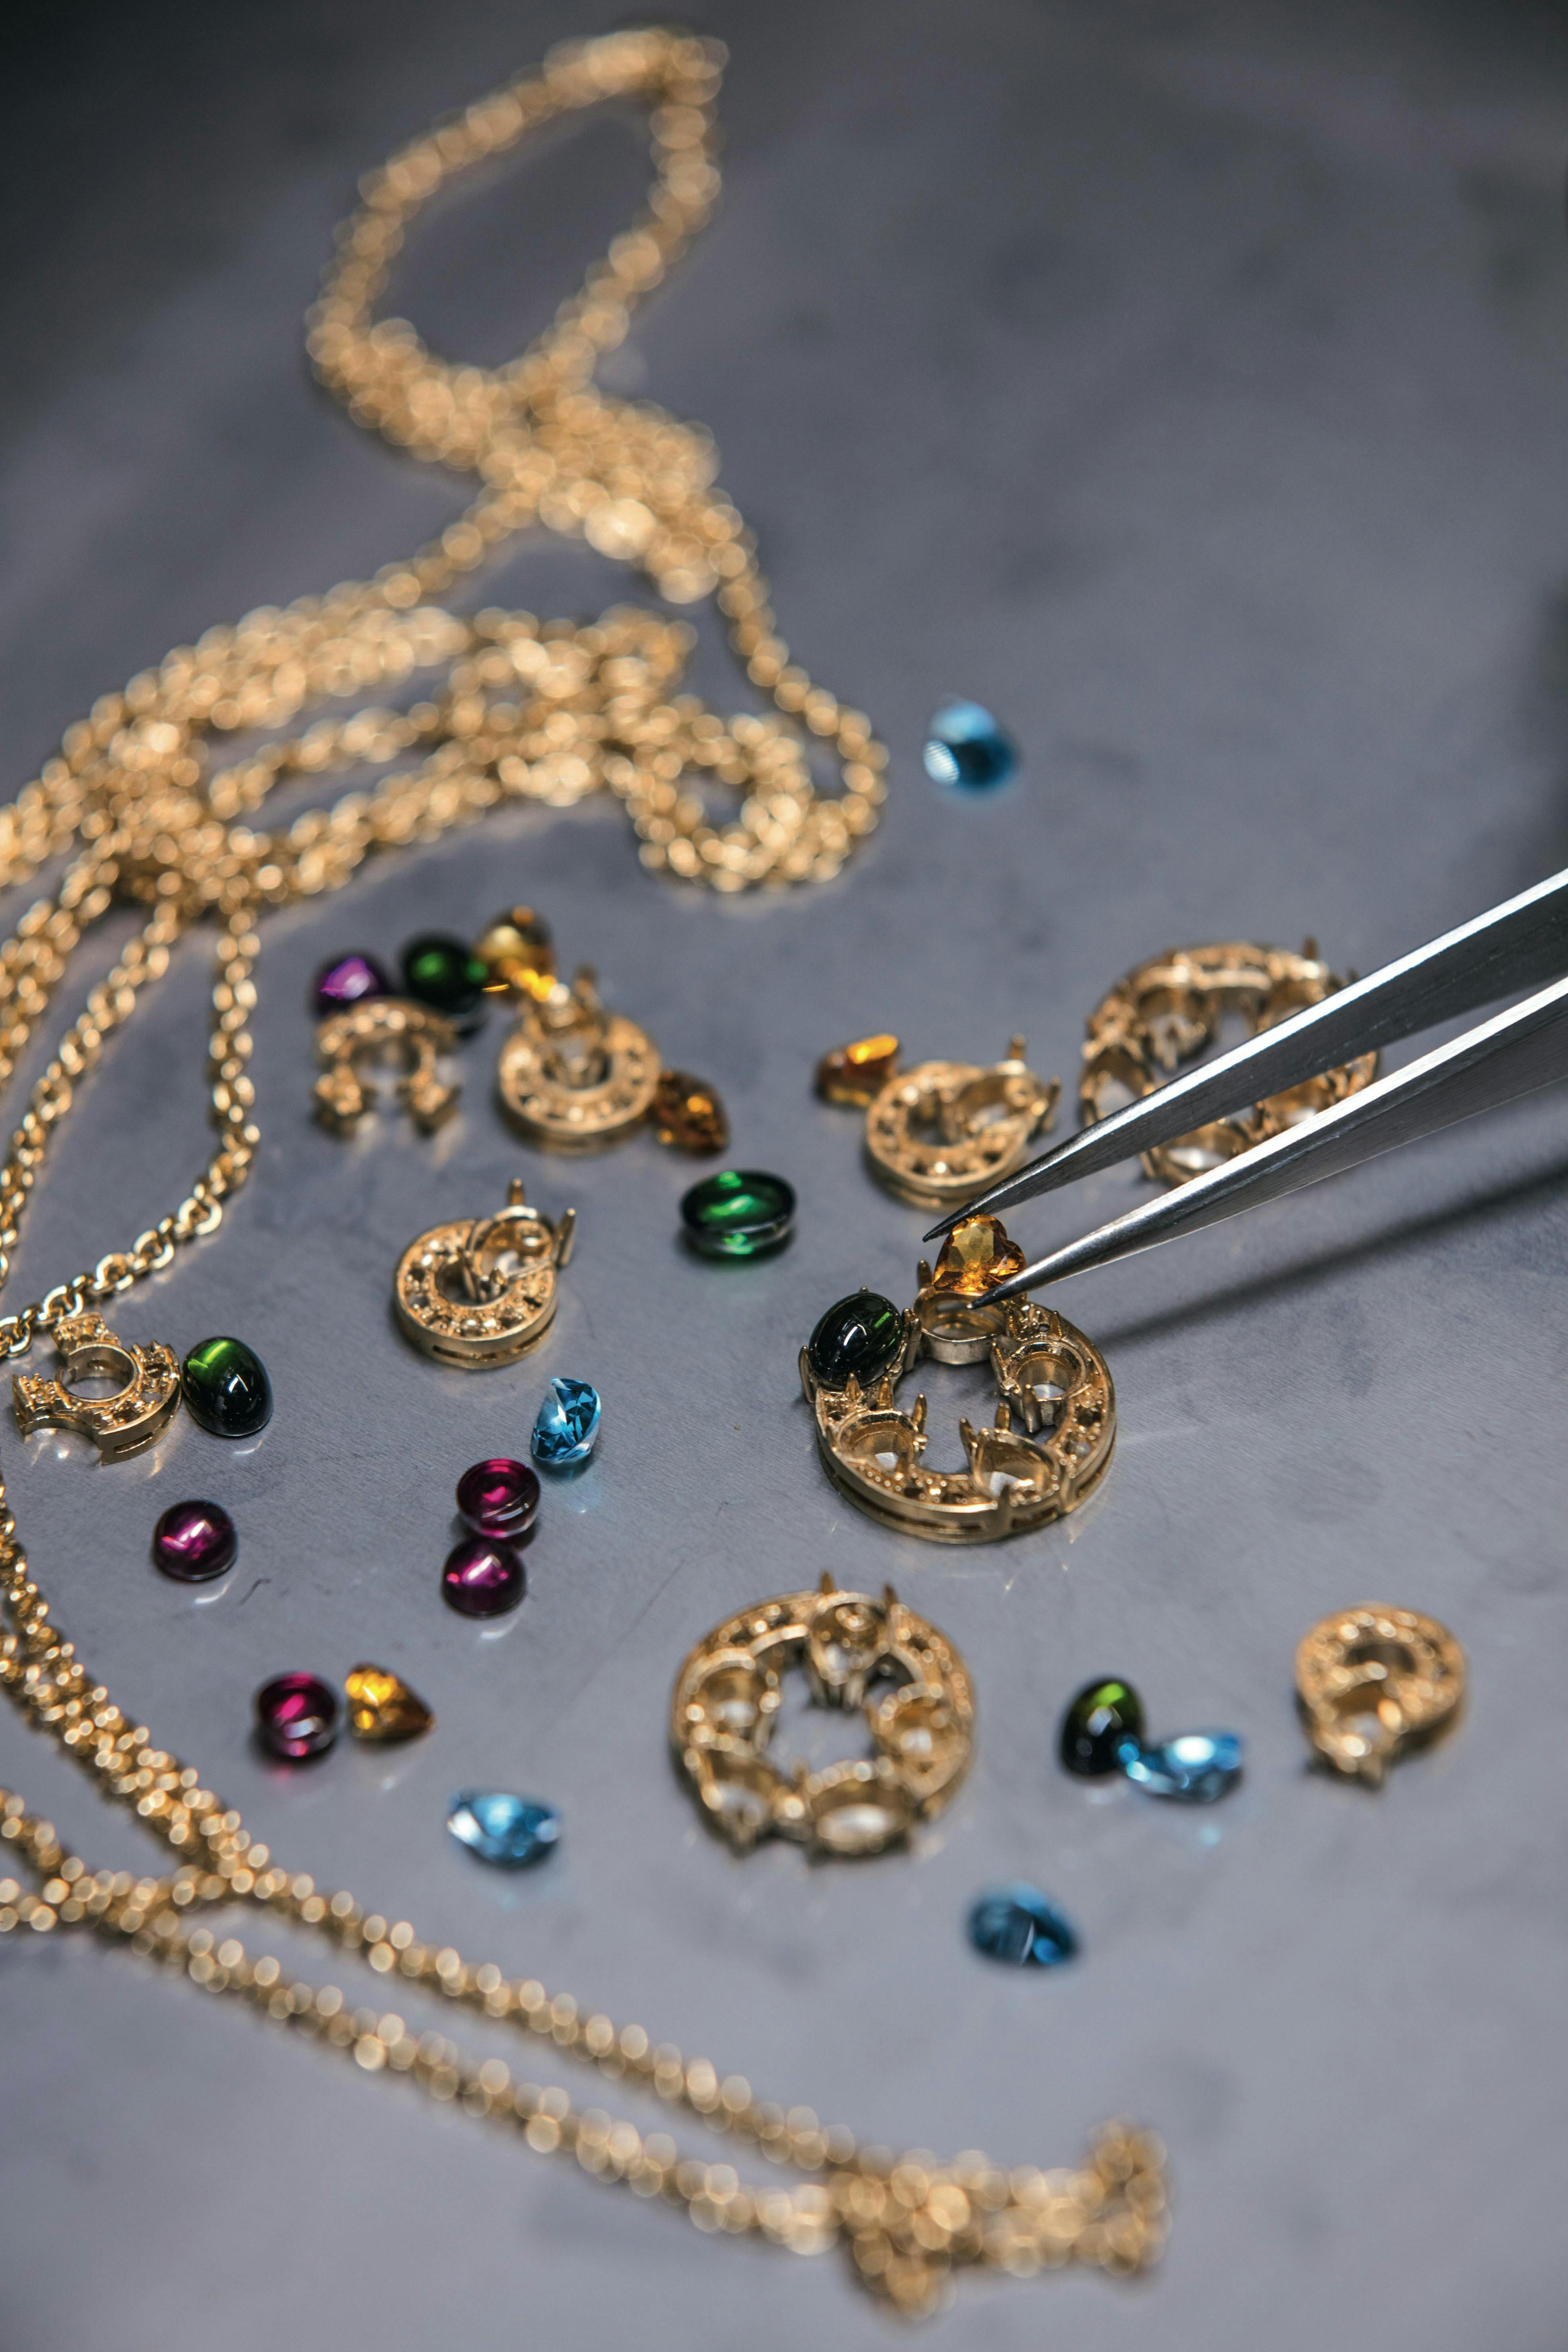 valenza piemonte necklace jewelry accessories accessory bead